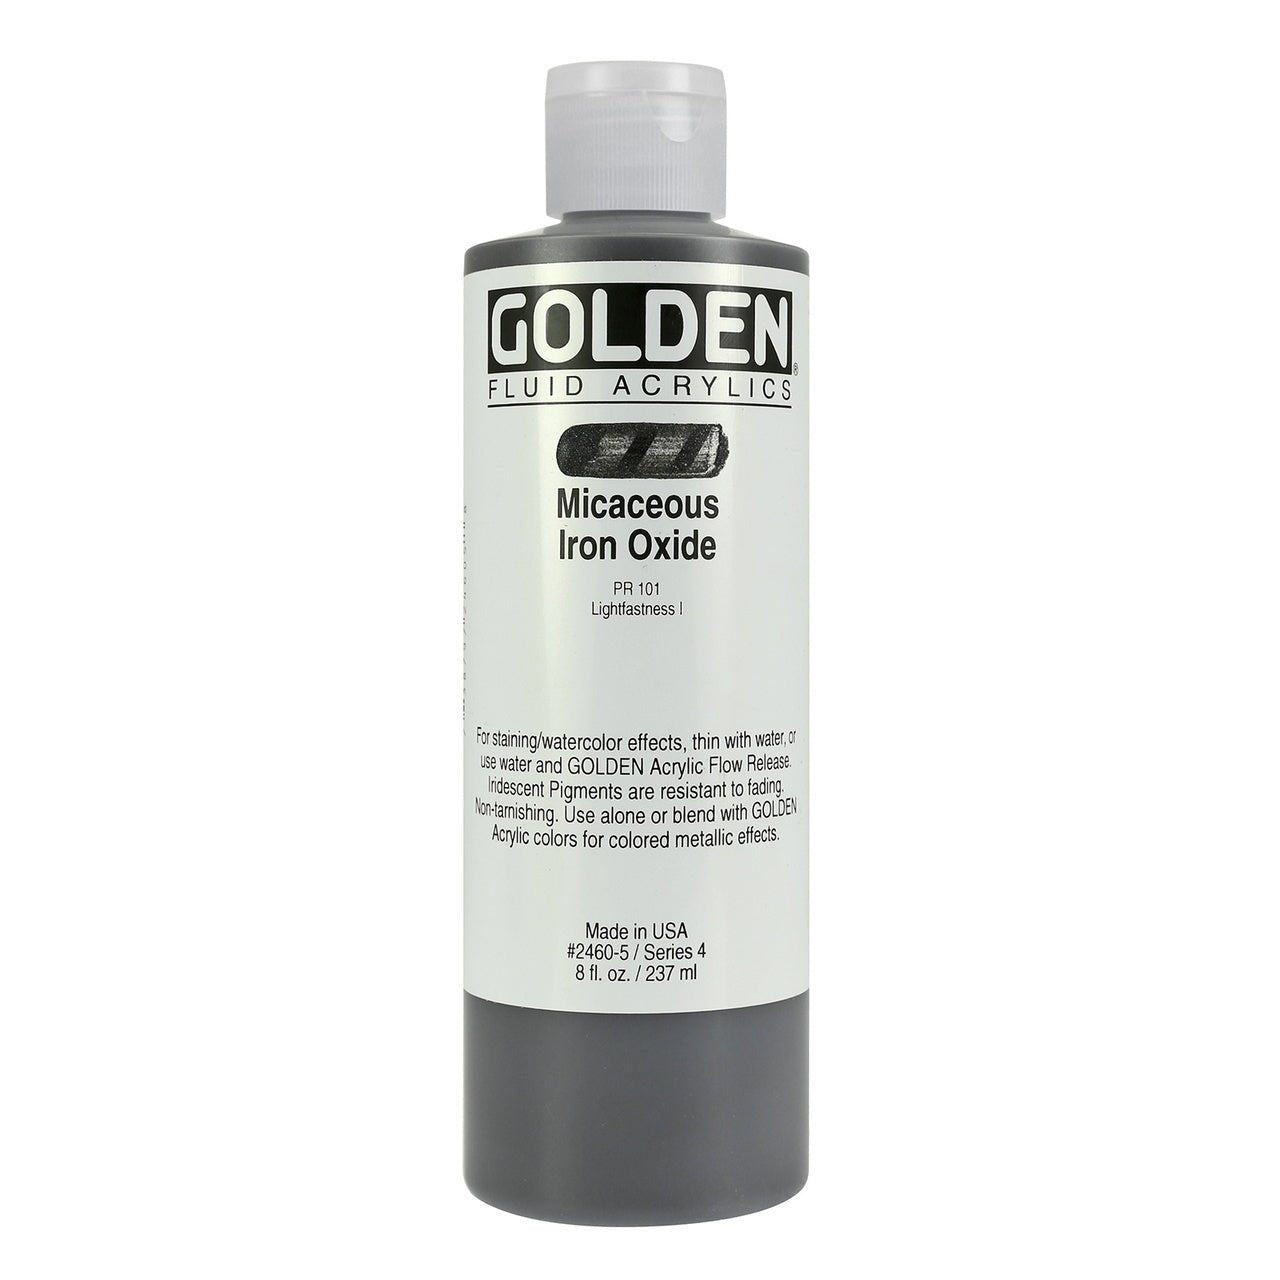 Golden Fluid Acrylic Micaceous Iron Oxide 8 oz - merriartist.com